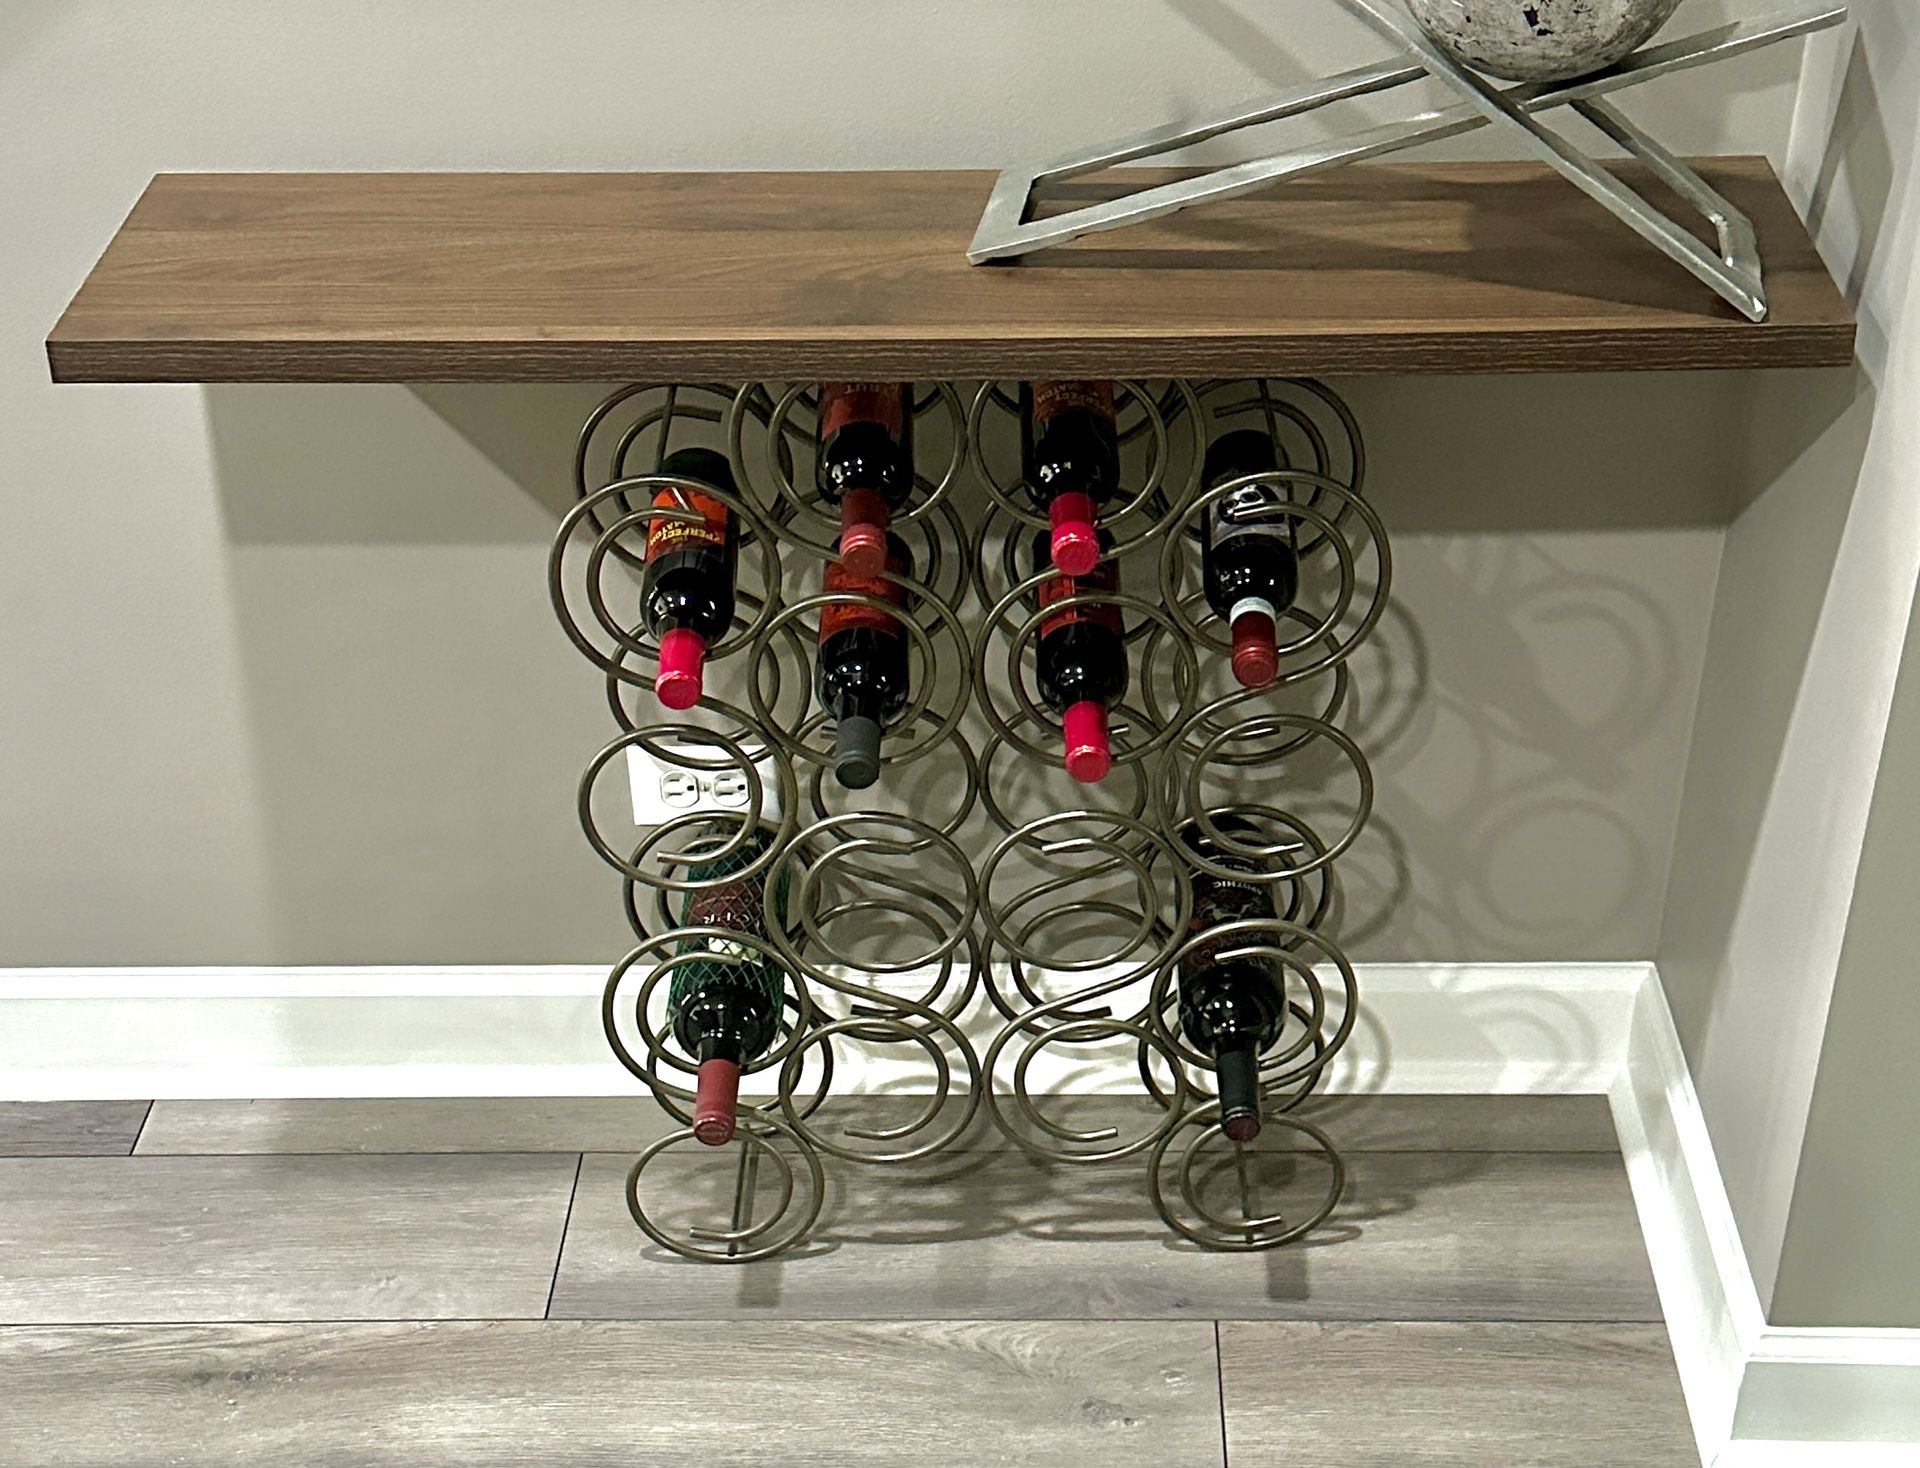  Sleek Wood Top Sofa Table with Metal  Wine Rack Freestanding Base.  16-Bottle Wine Storage Rack, Bar table  for Kitchen, Dining Room, Bar.